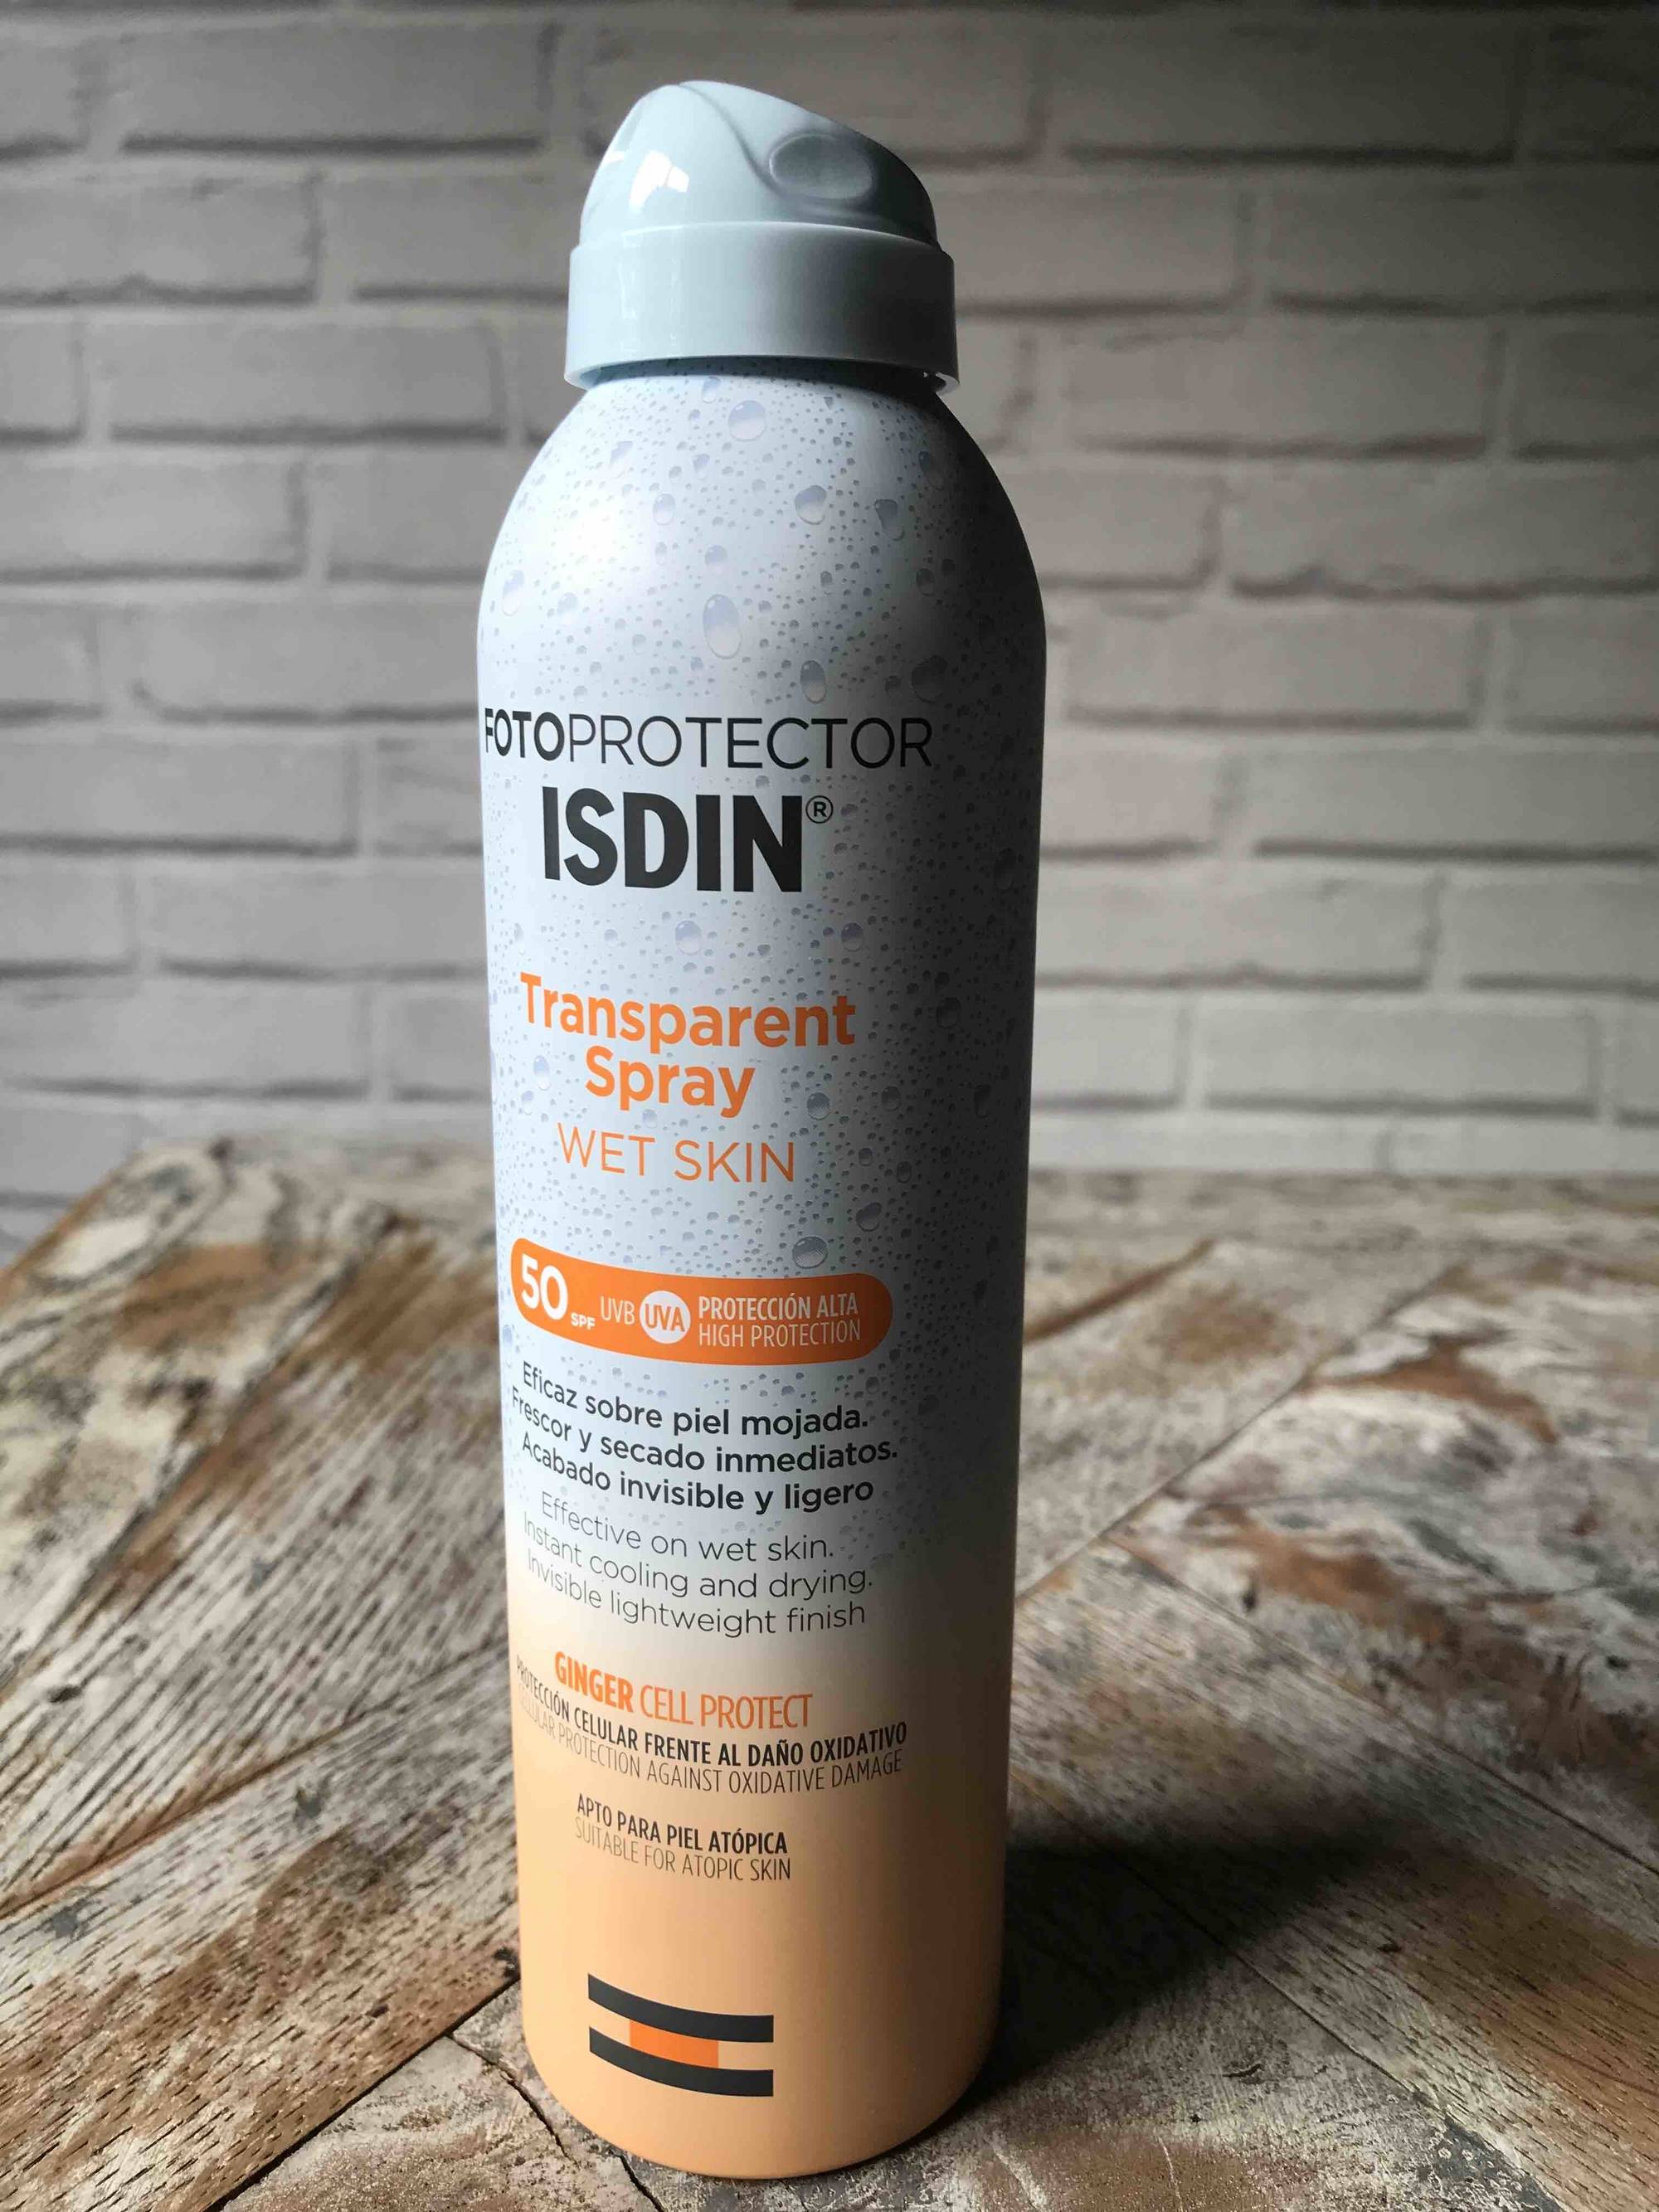 ISDIN - Fotoprotector - Transparent spray wet skin SPF 50